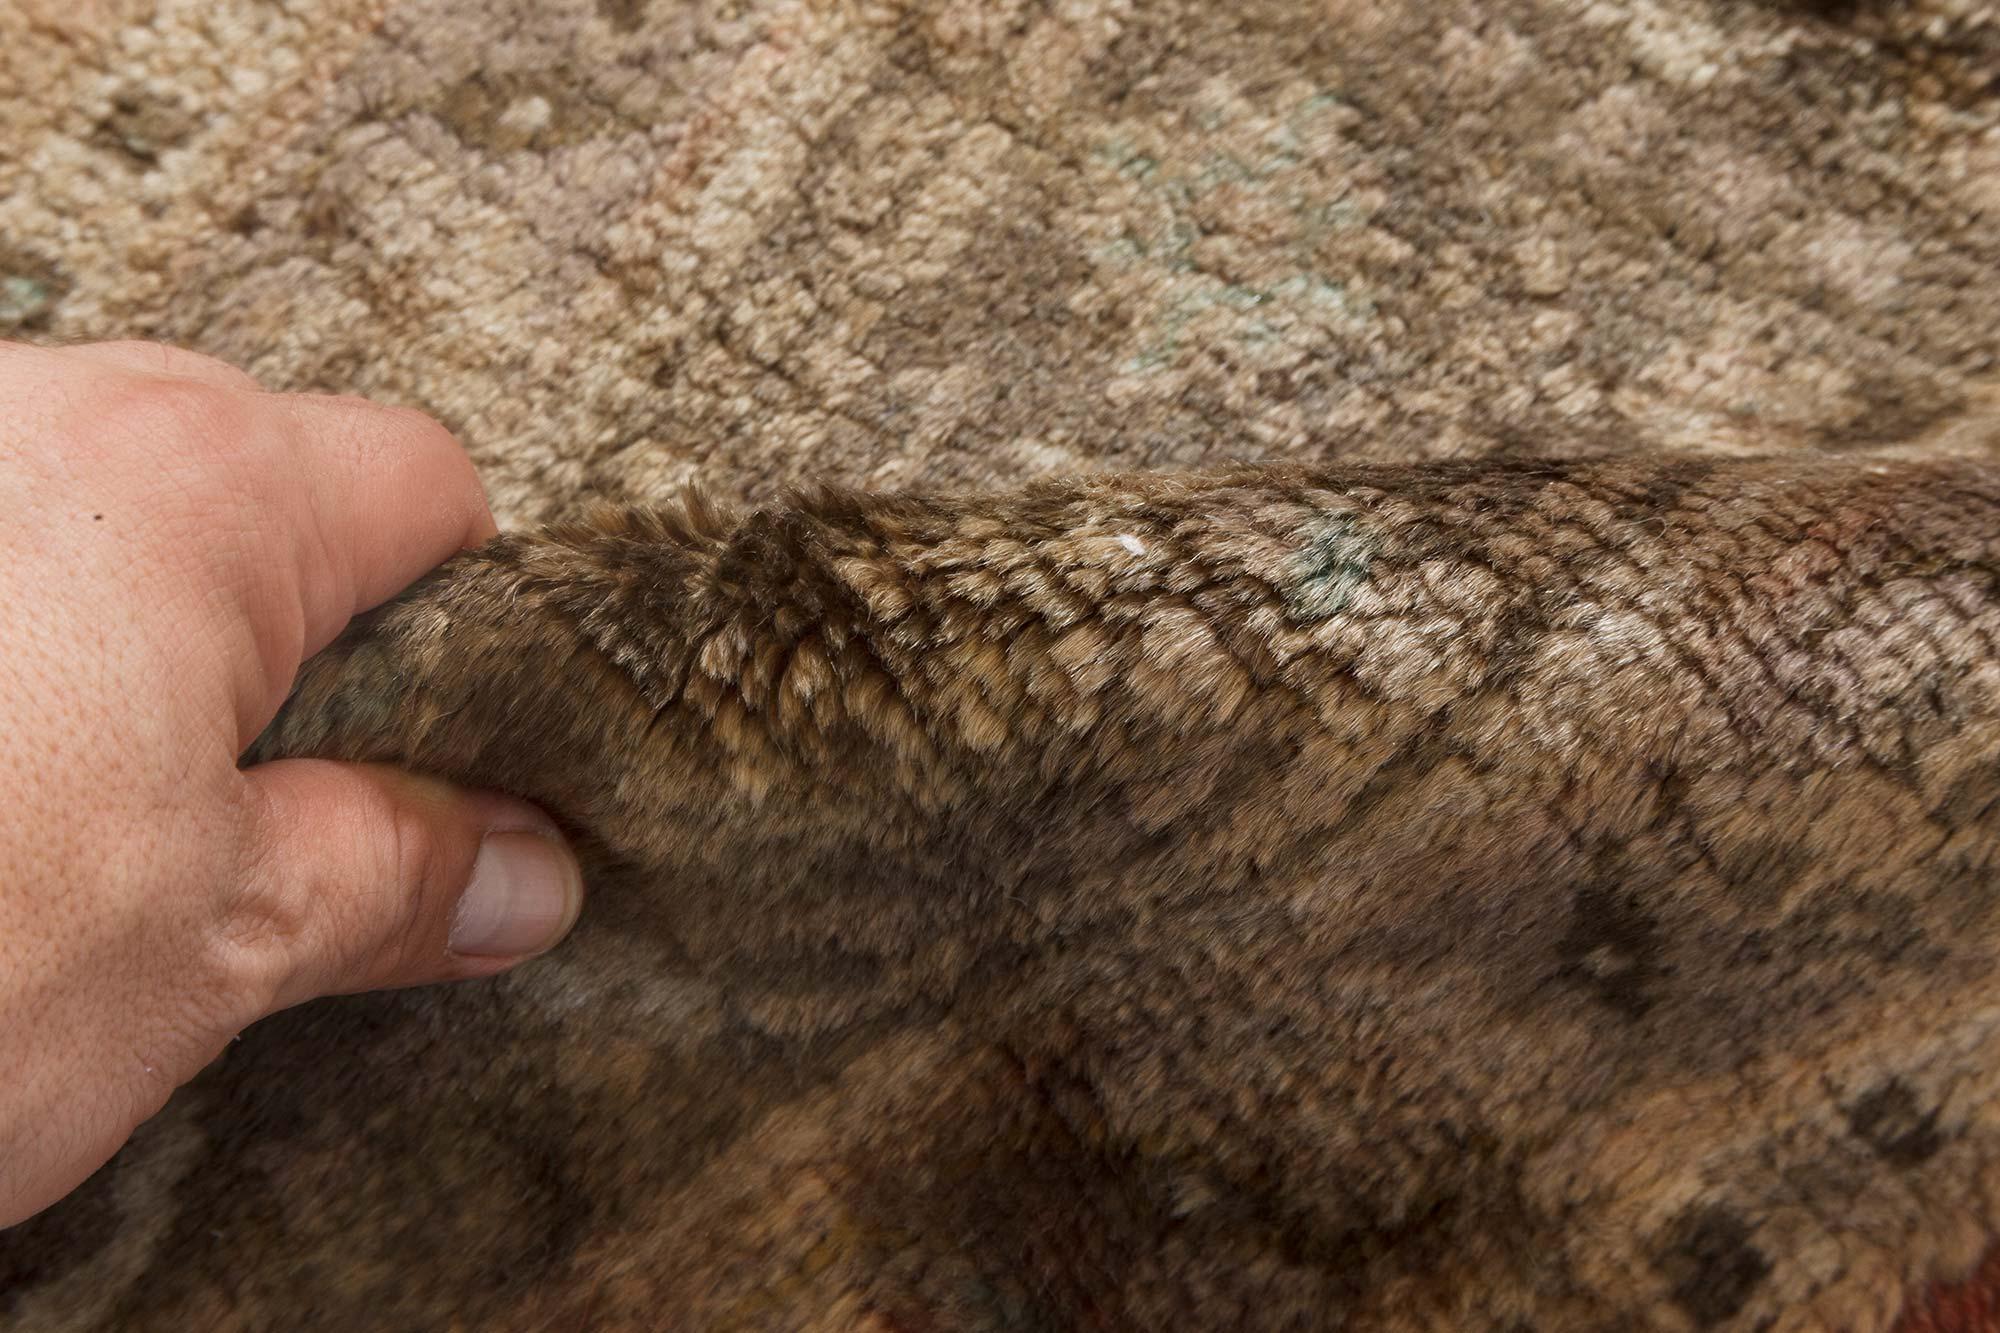 Turkish Oushak handmade wool rug
Size: 6'3